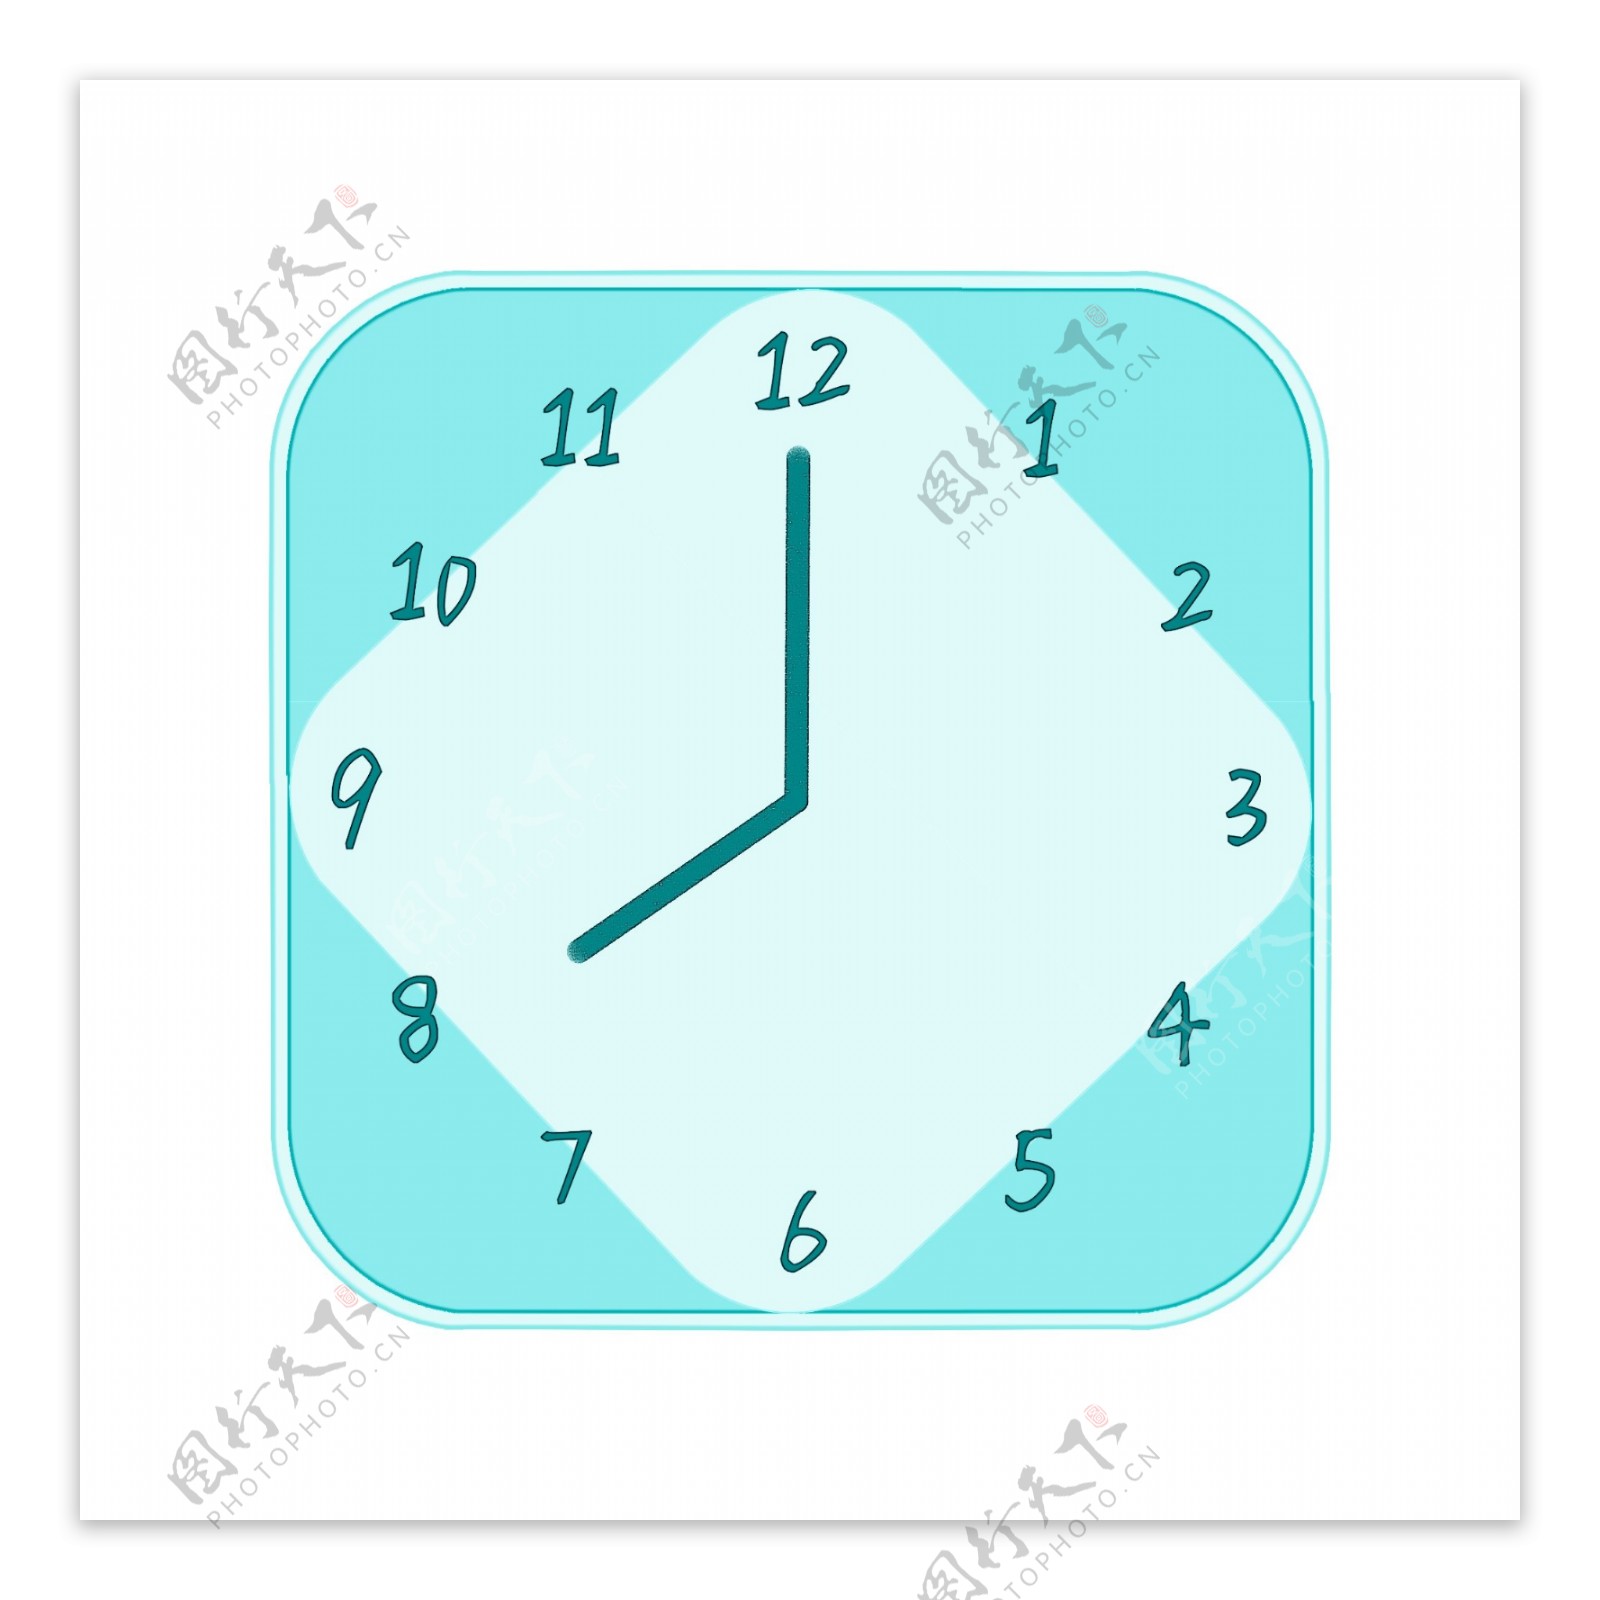 Alarm Clock Cartoon Image : Alarm Clock Cartoon Vector And Illustration Hand Drawn Style ...